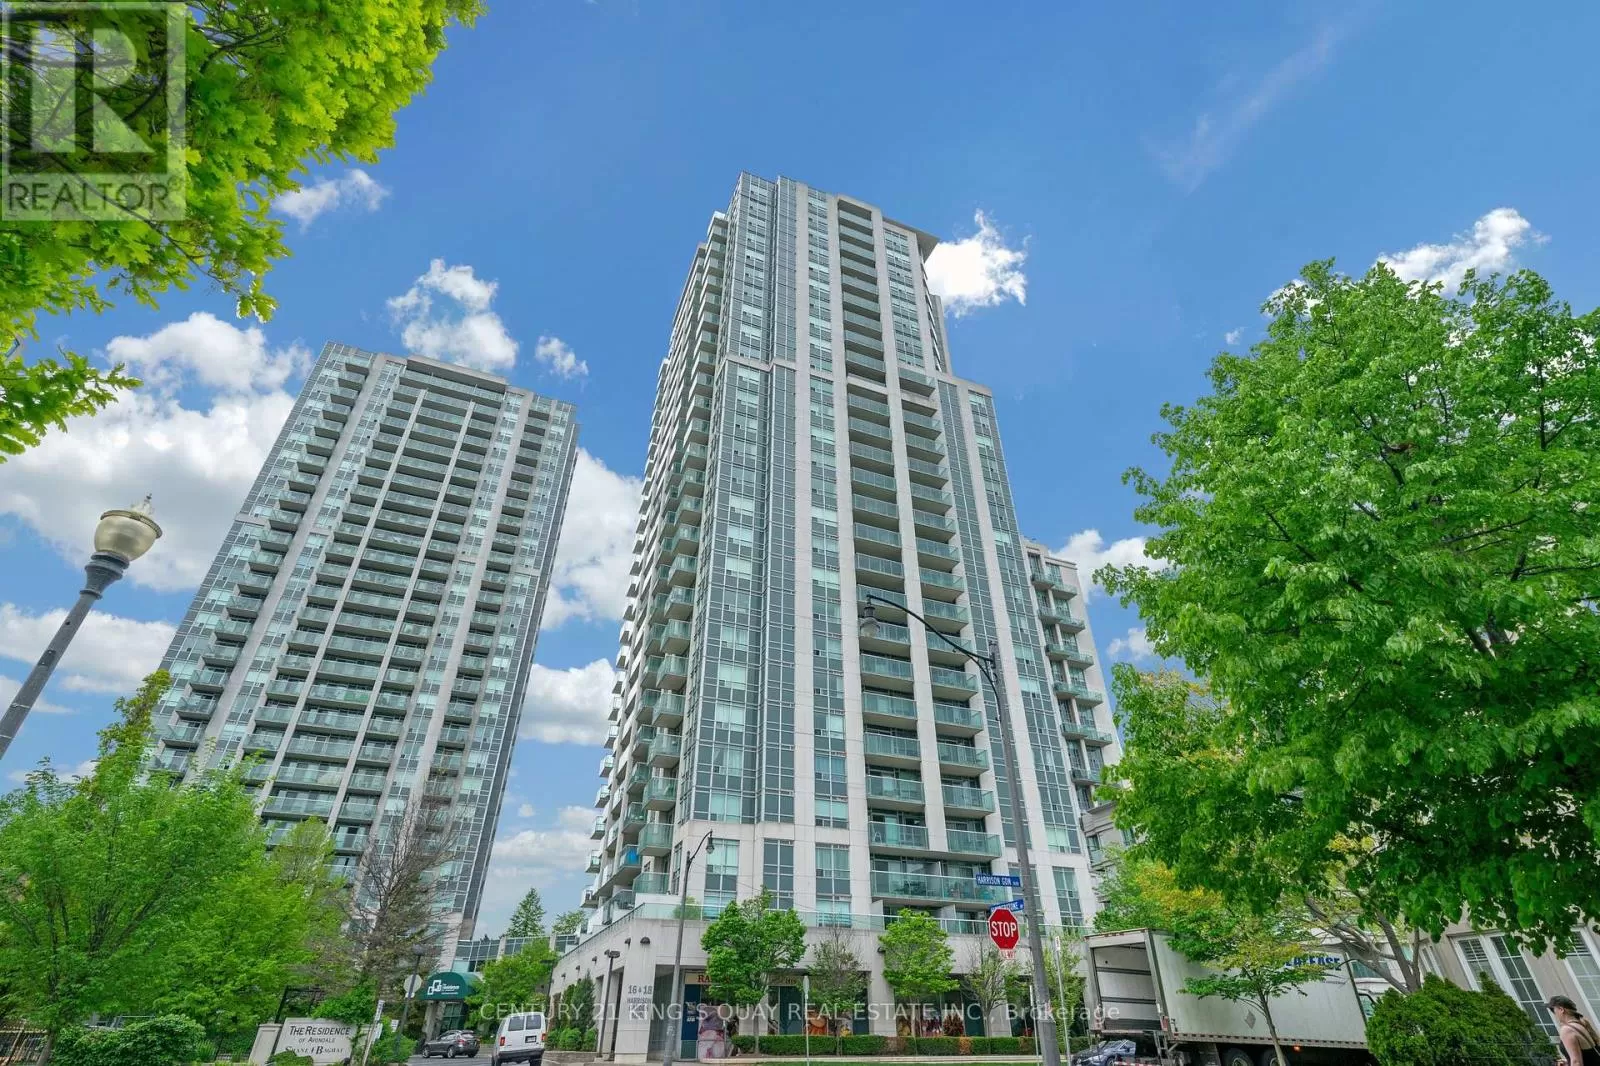 Apartment for rent: 303 - 16 Harrison Garden Boulevard, Toronto, Ontario M2N 7J6